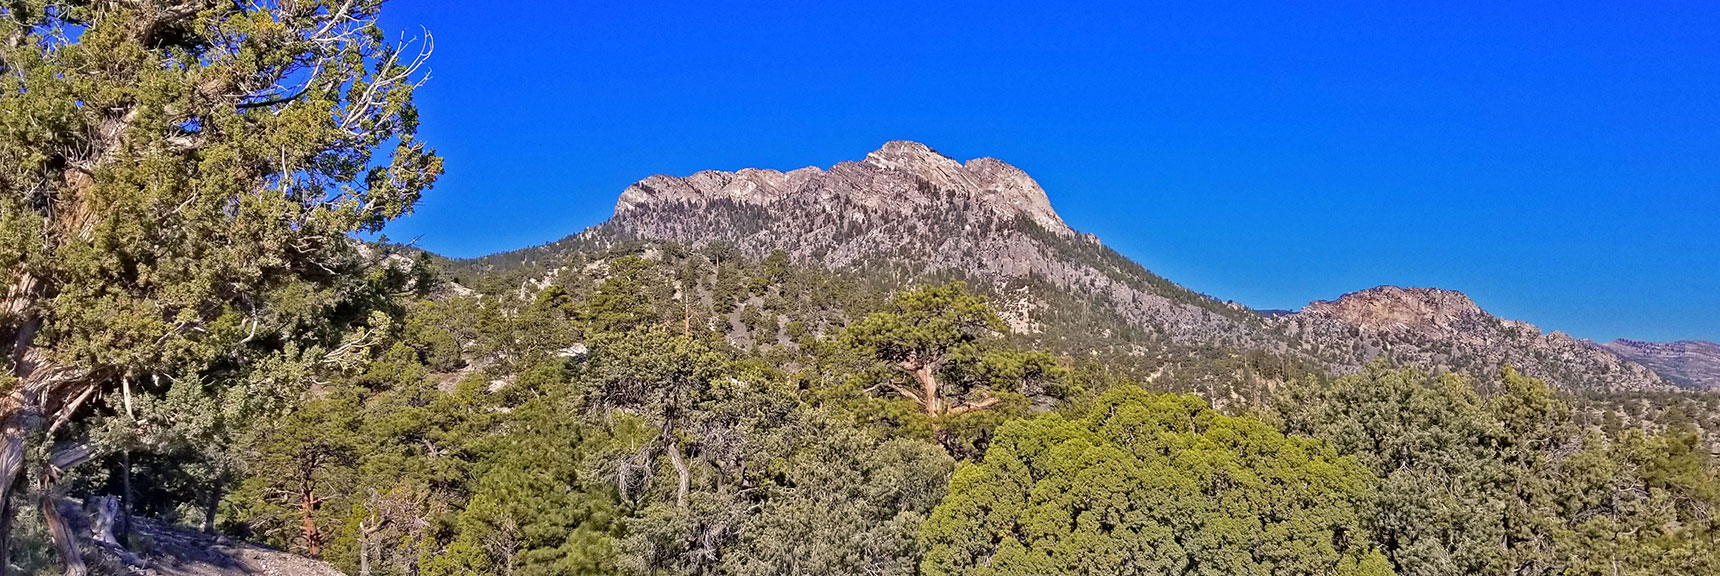 Macks Peak from High Point on Macks Canyon Rd | Macks Peak | Mt Charleston Wilderness | Spring Mountains, Nevada